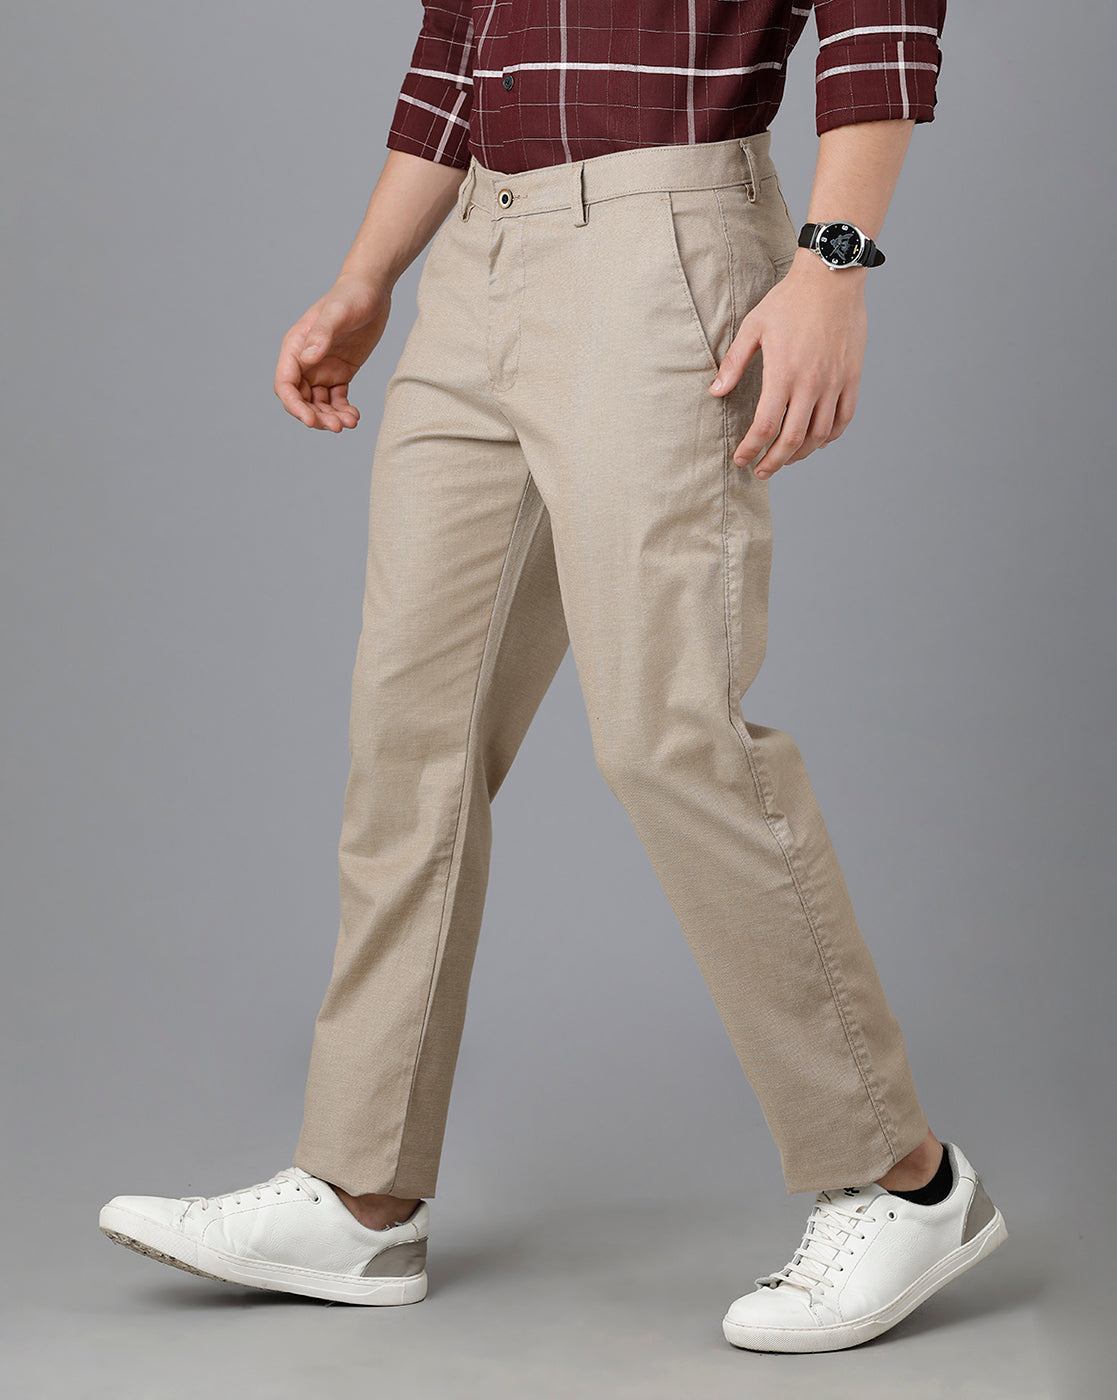 Toplove Wild Safari And Suspender Pant Set | Kids, Boys, Shirts, Pants,  Green, Thread, Shirt: 100% Cotton, Shirt Col… | Suspender pants, Types of  sleeves, Pants set